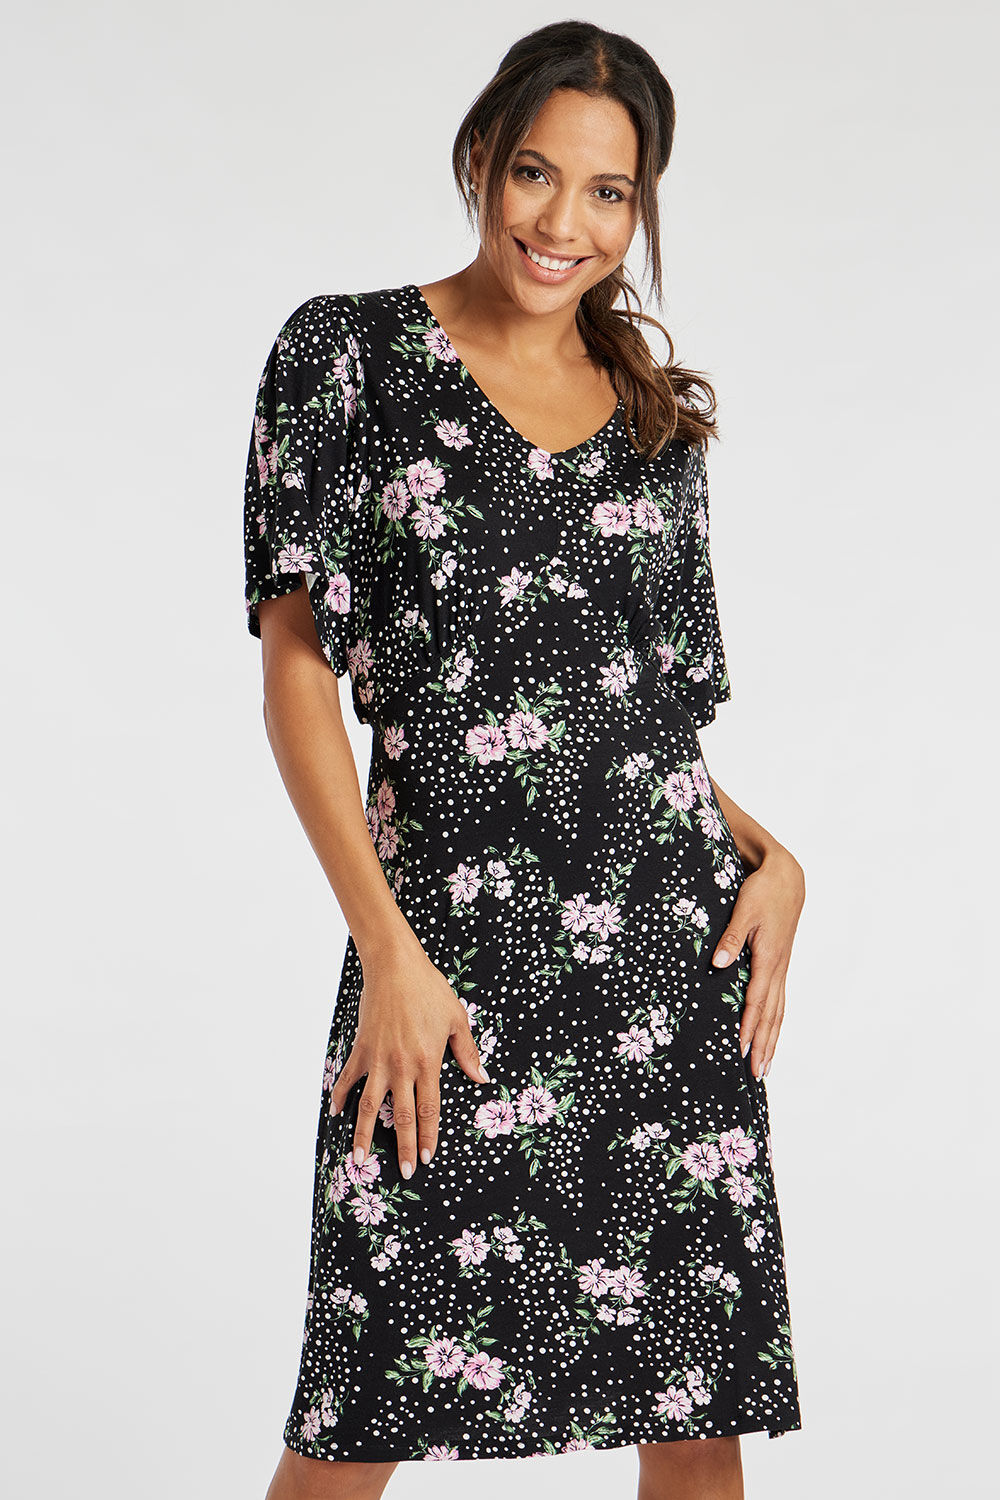 Bonmarche Black Floral Spot Print Jersey Tea Dress, Size: 24